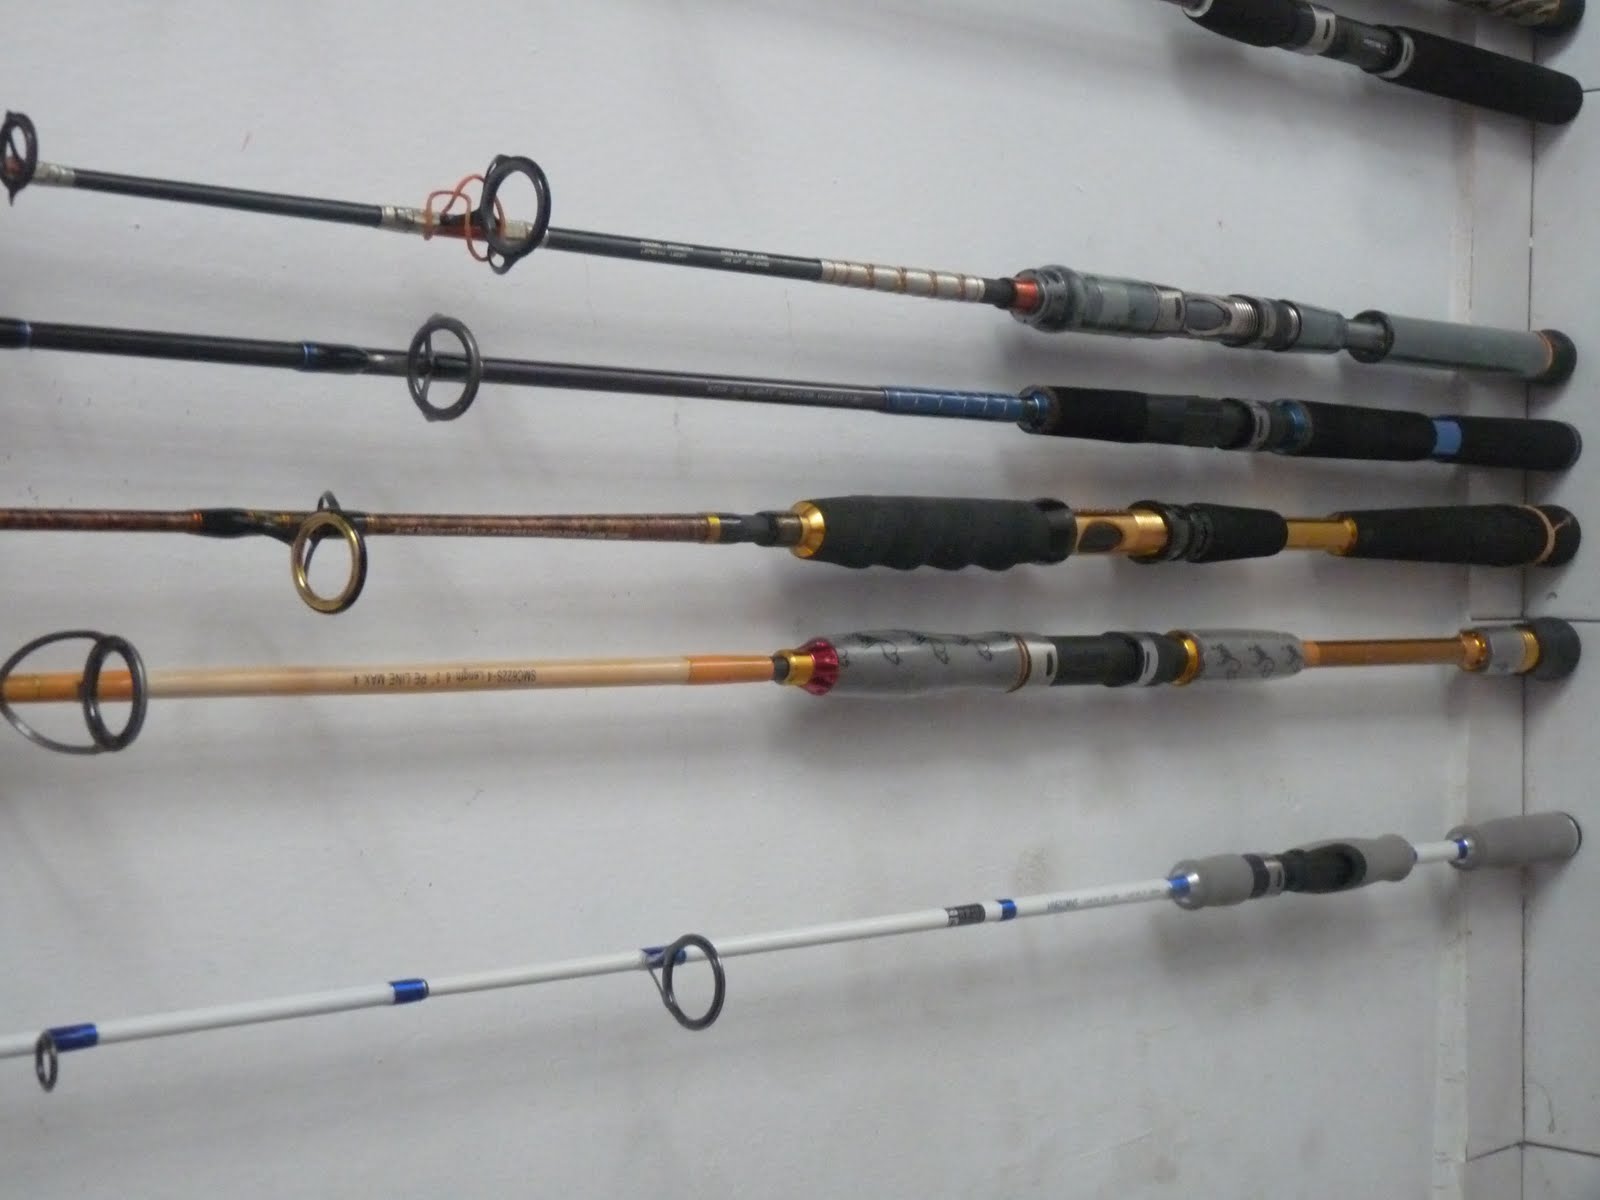 Бу рыбацкие. Спиннинг winner High Fishing Tackle Art:2010502. Спиннинг Art Custom Rods fwr561-2hm -. Удочка Fish Pole Rod 500. Fishing Tackle удочка 3 метра.